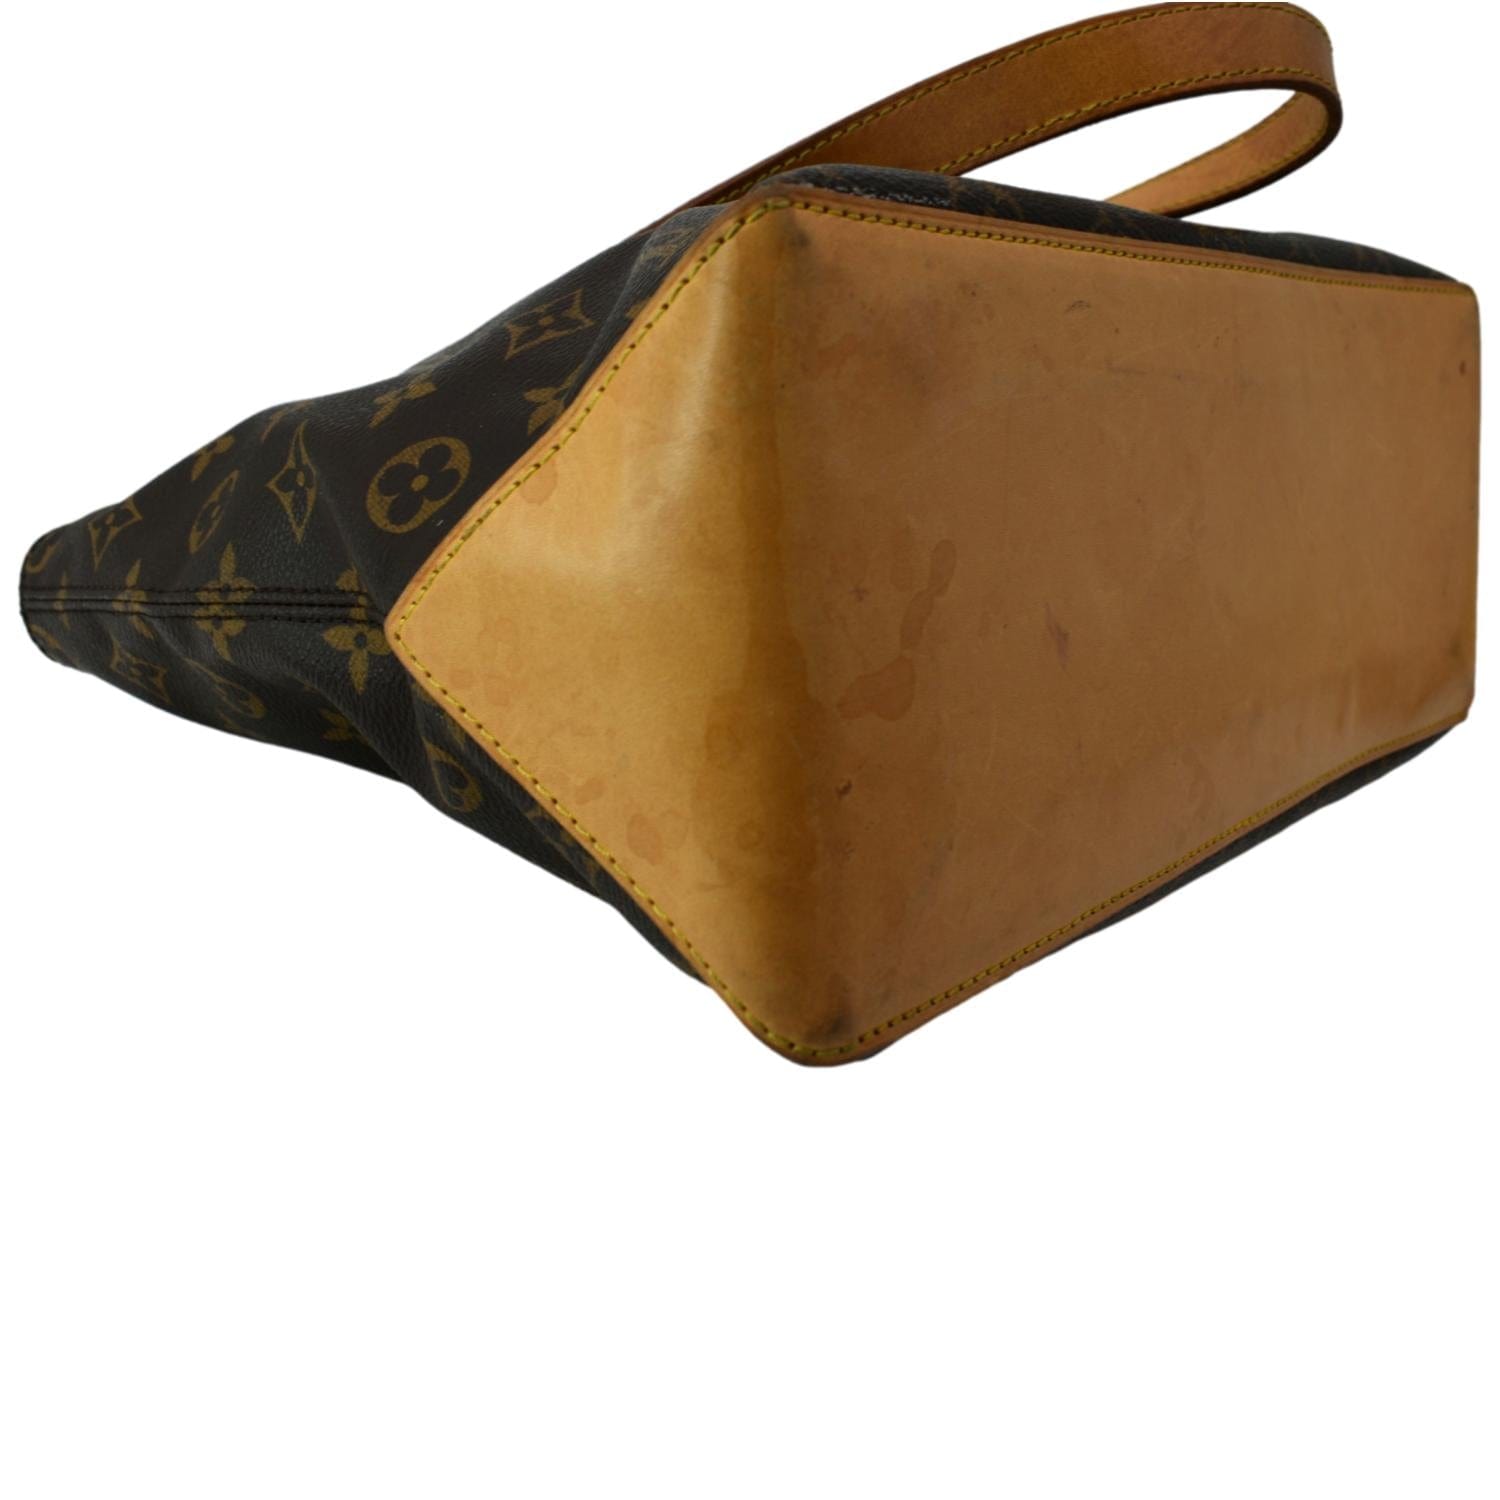 Authentic Louis Vuitton Monogram Tote Bag Browns Cabas Piano